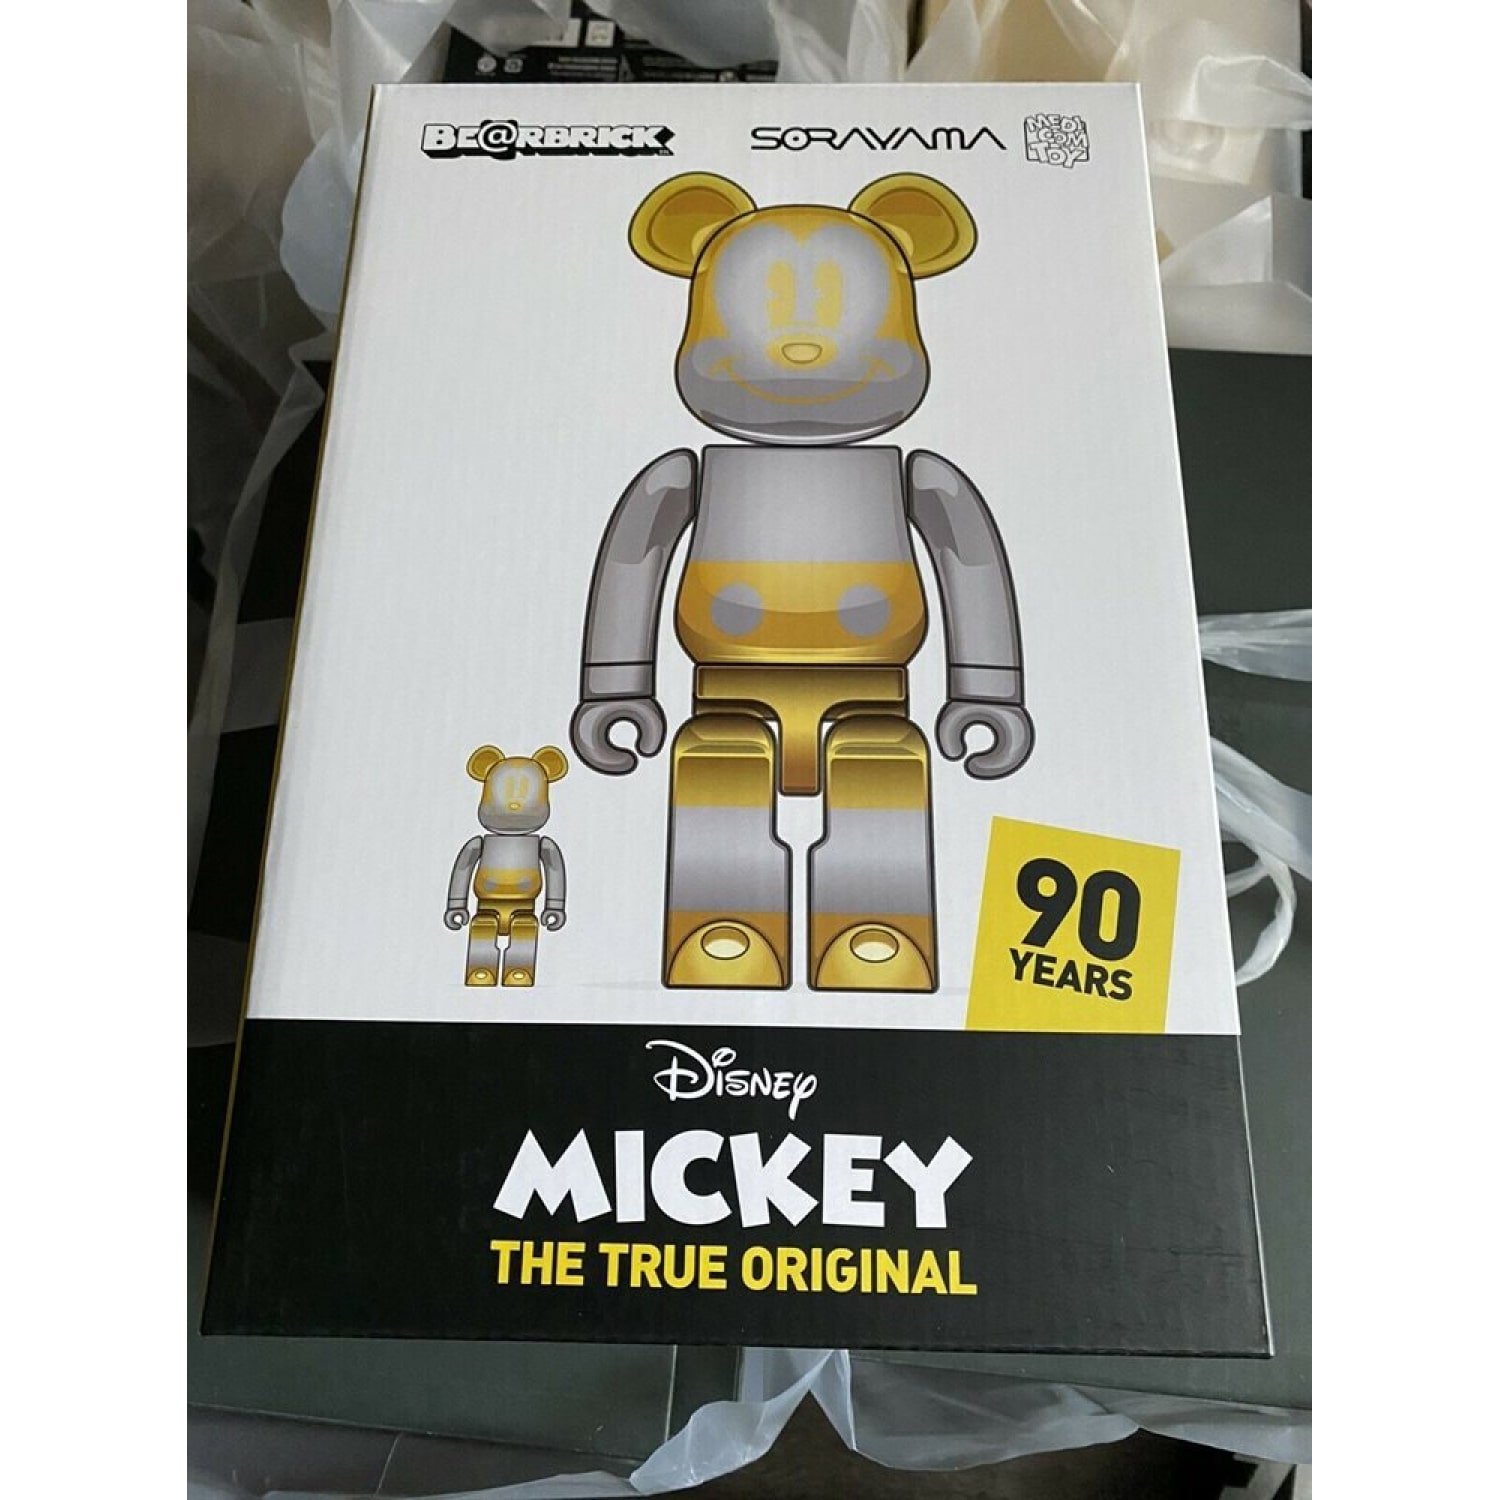 Sorayama Mickey 90 years” from Be@rbrick - Dope! Gallery